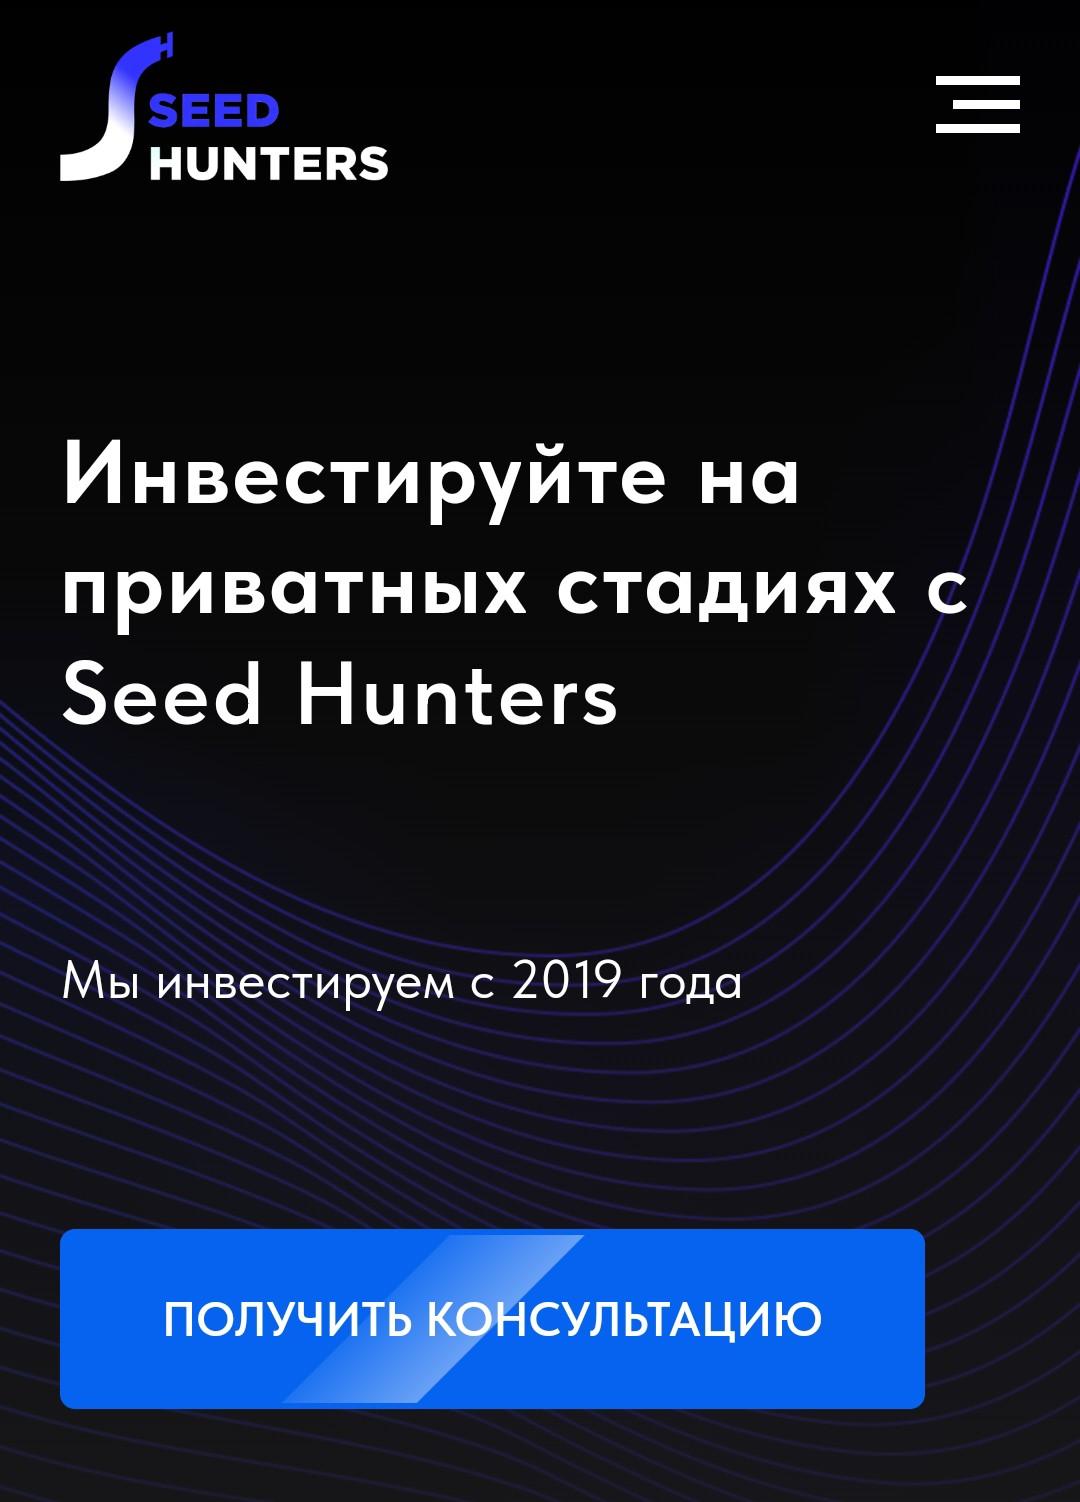 Seed hunters сайт